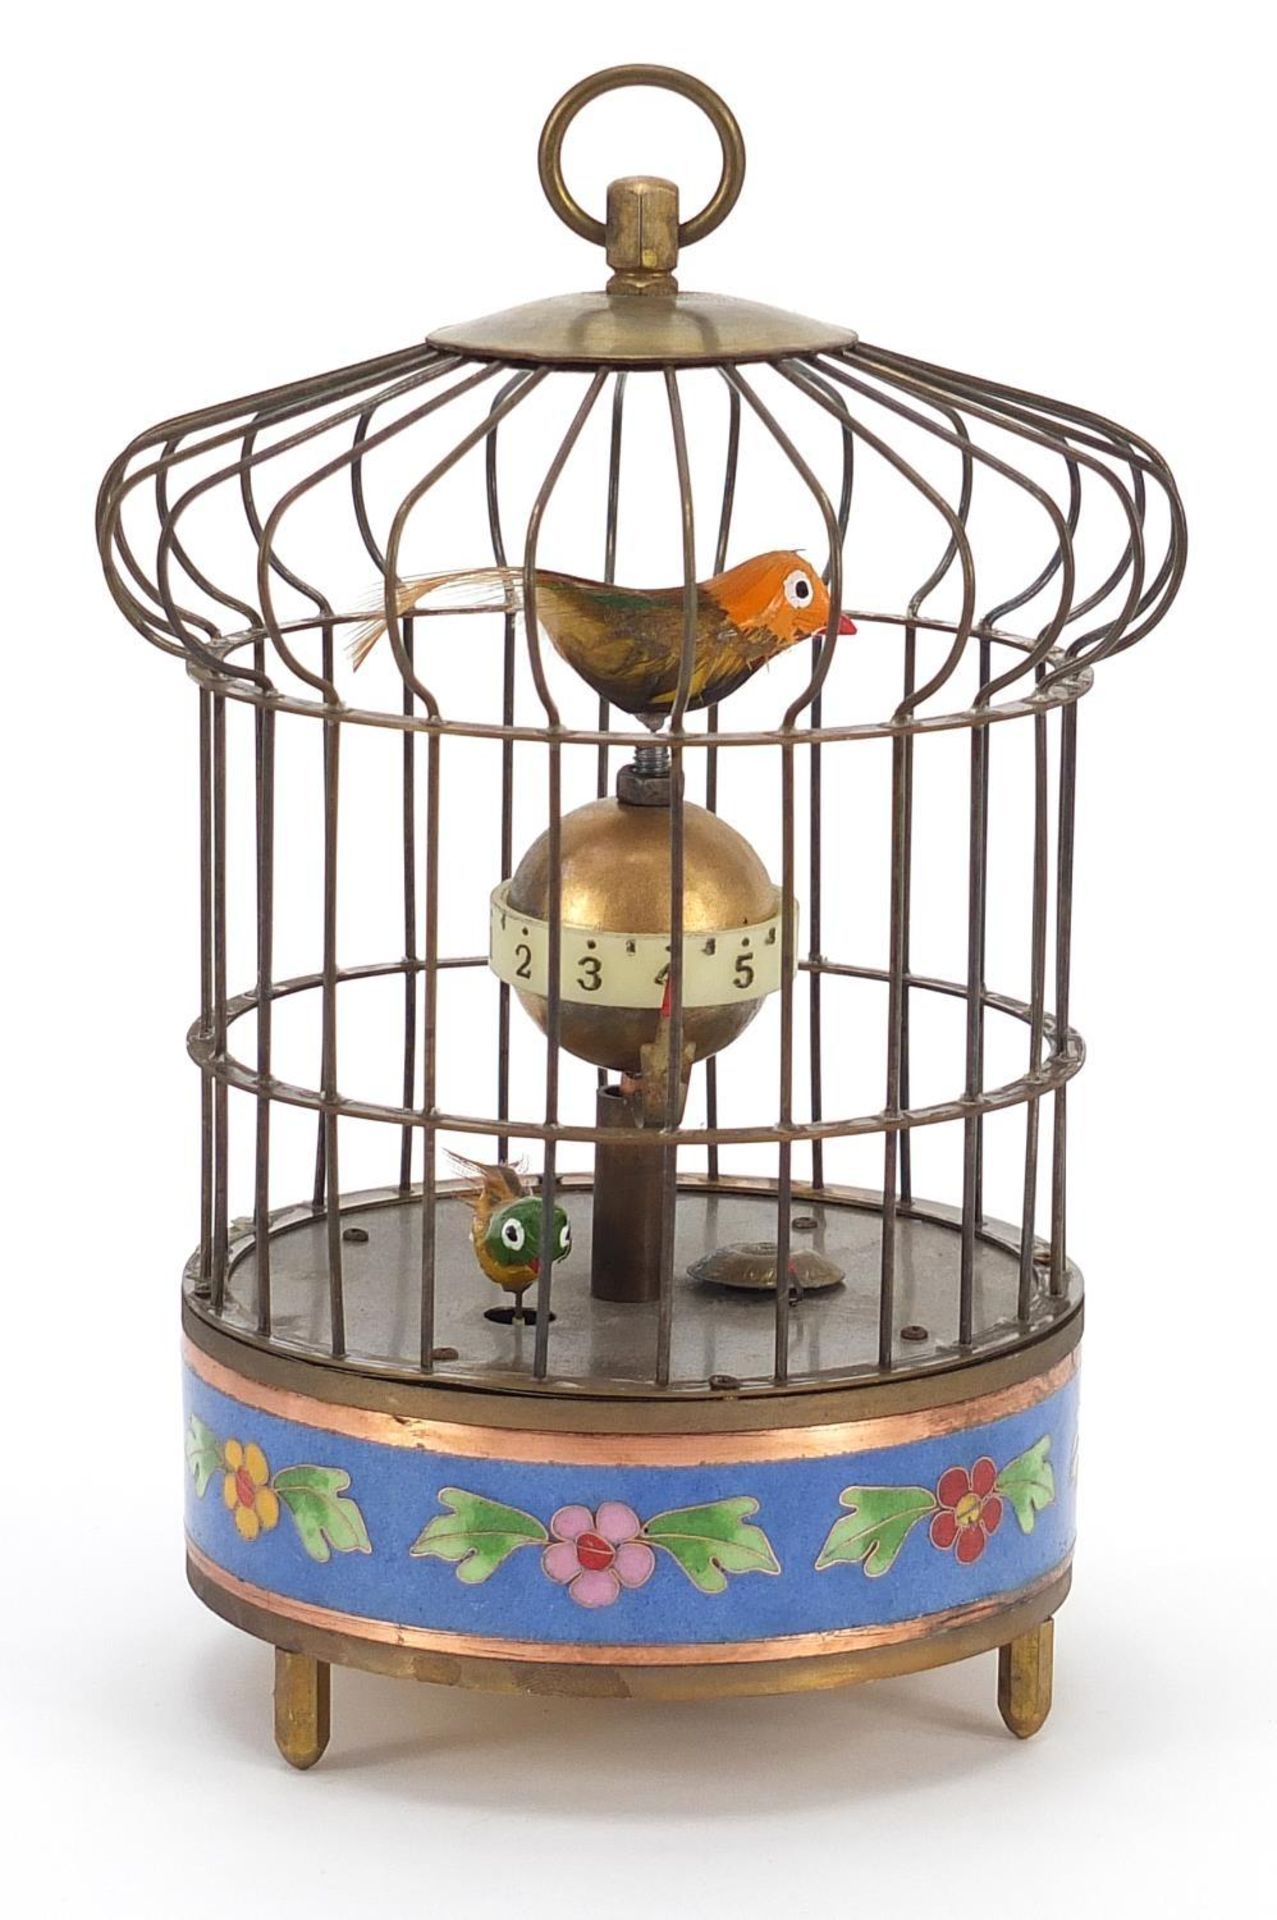 Brass clockwork automaton bird cage alarm clock with cloisonné band, 21cm high :